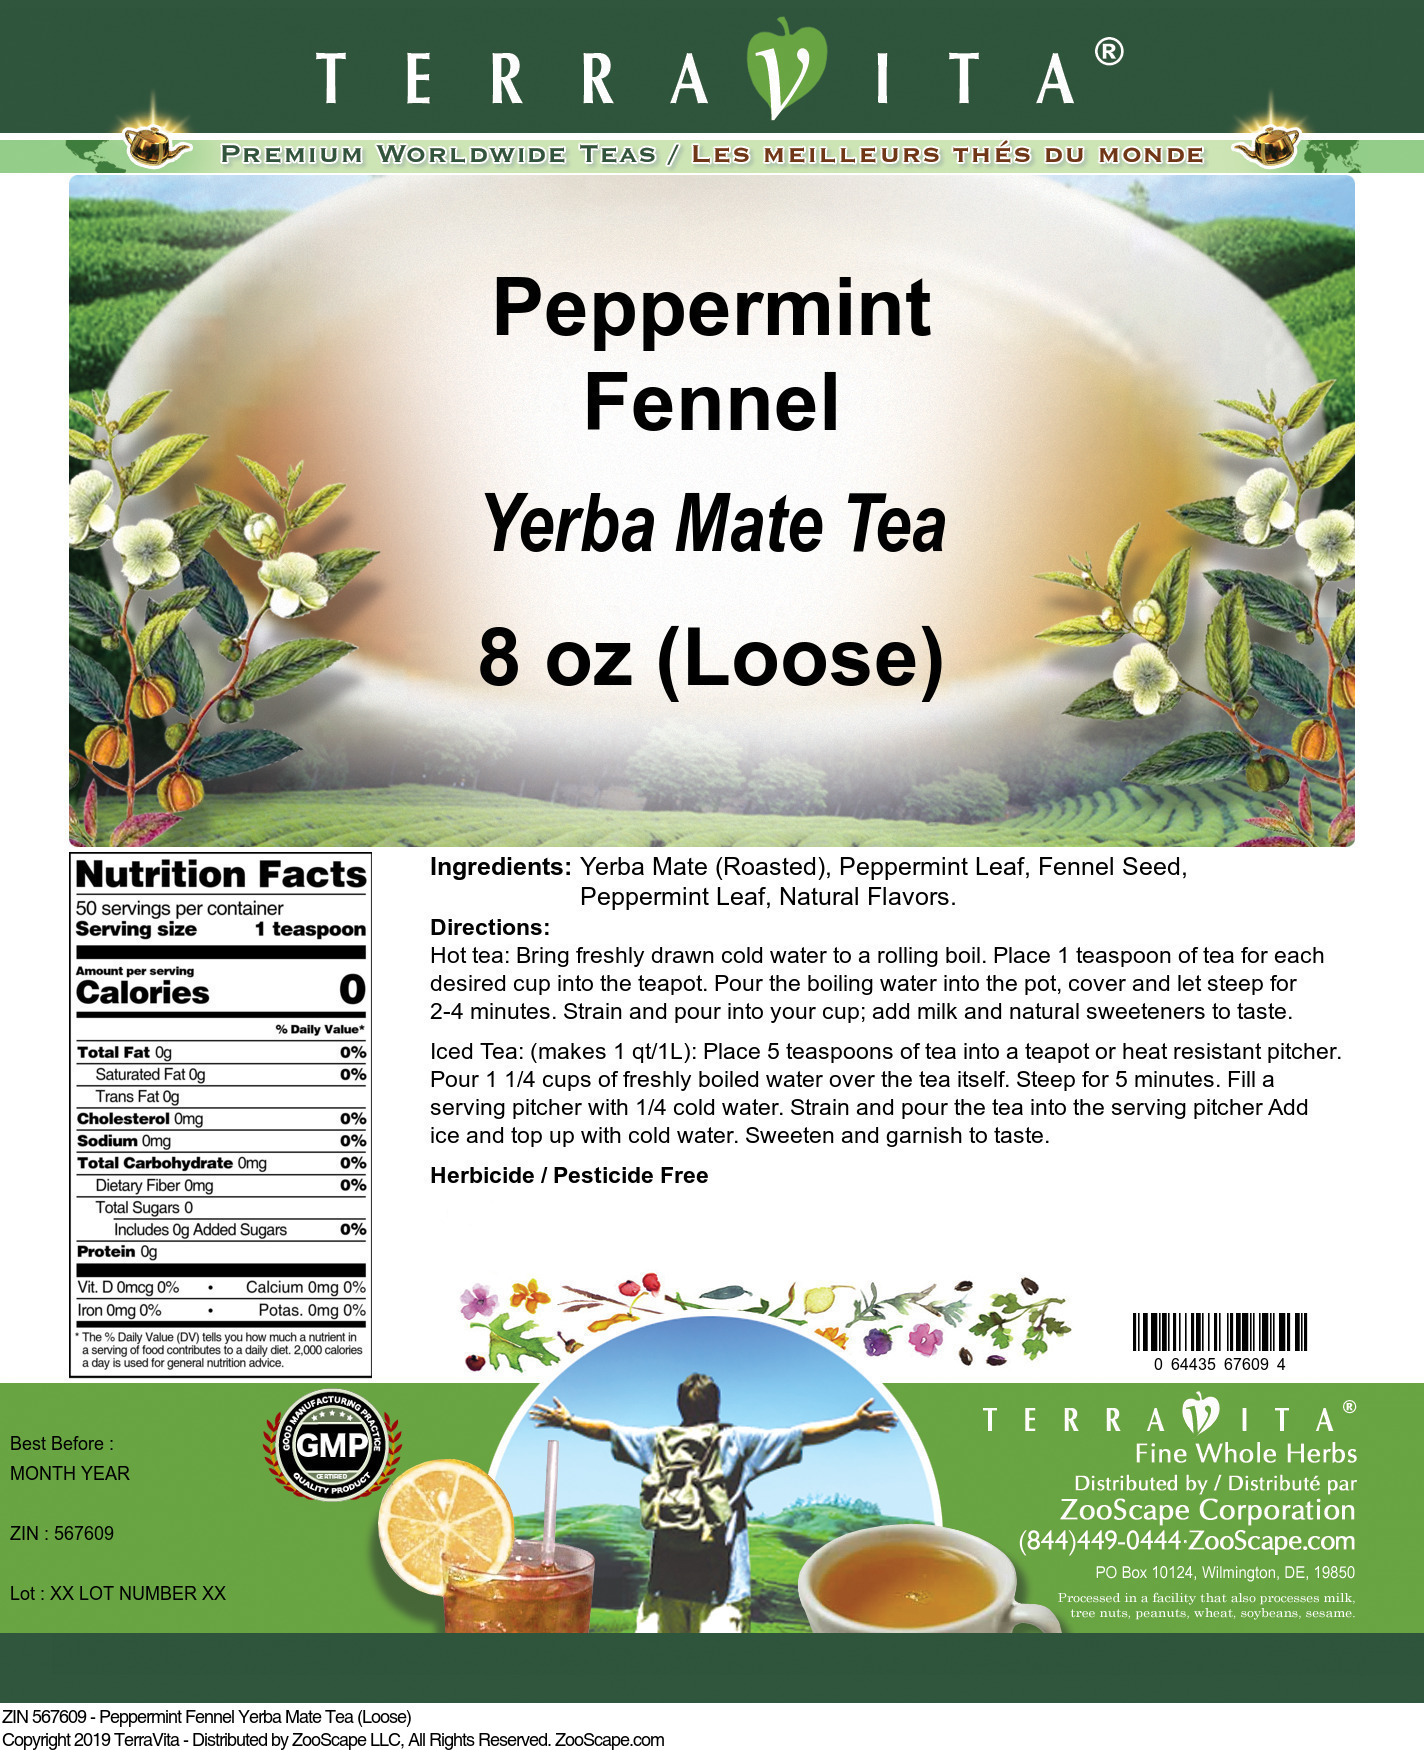 Peppermint Fennel Yerba Mate Tea (Loose) - Label